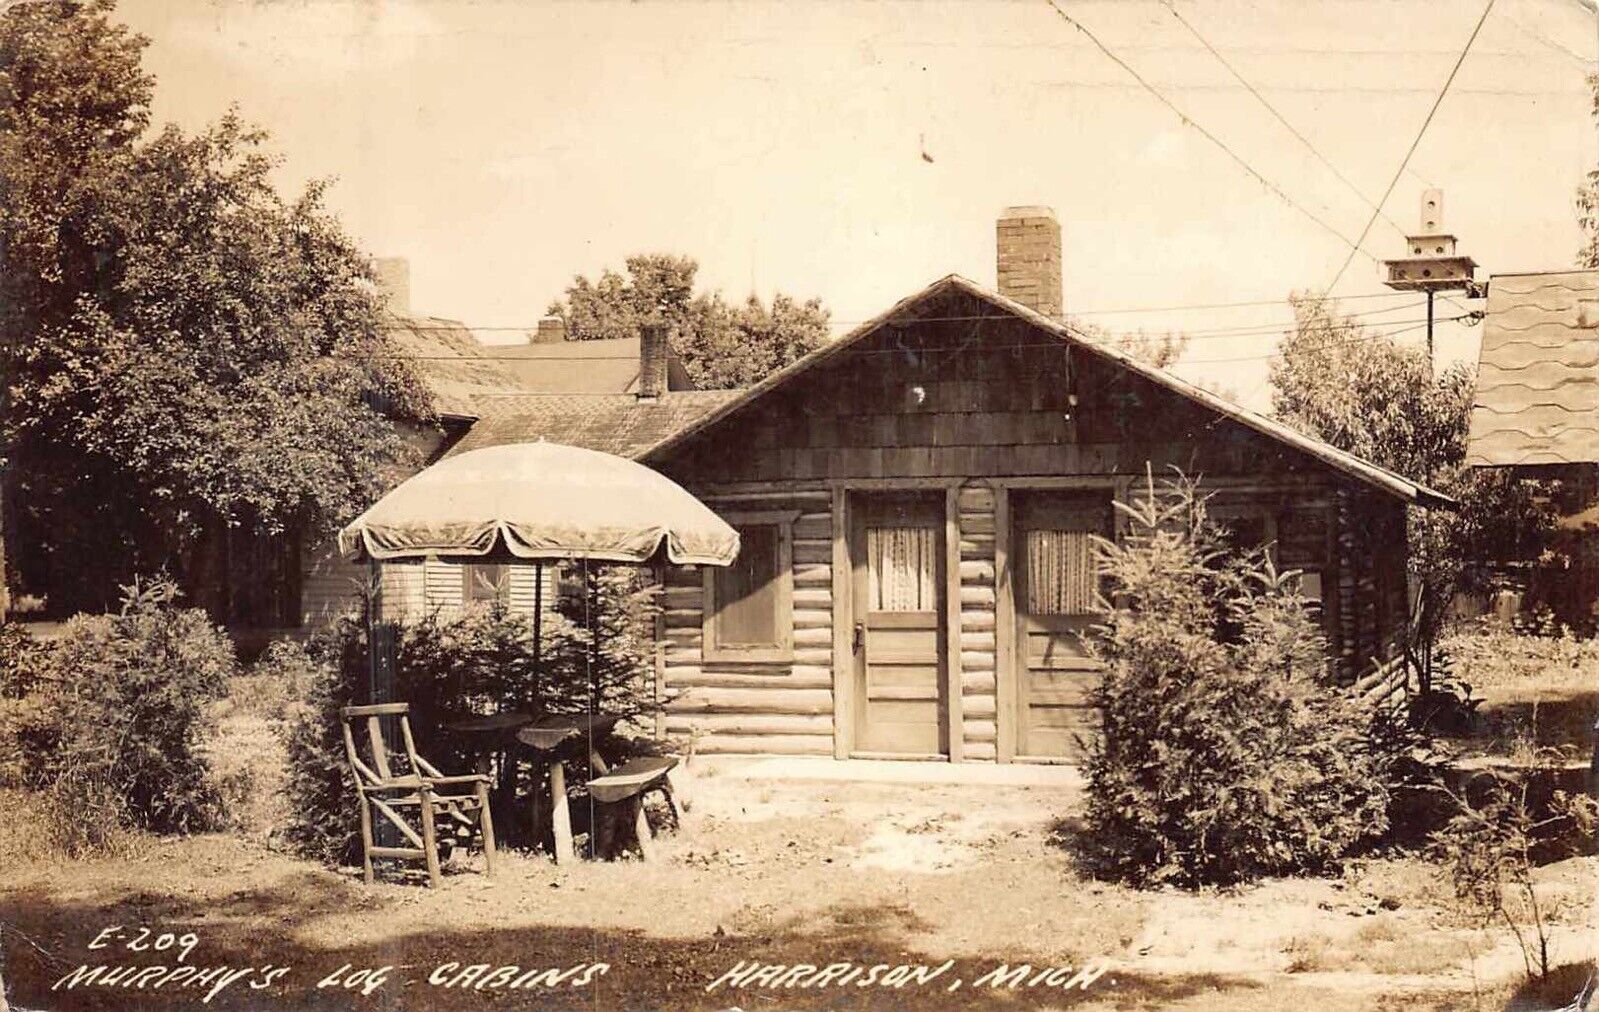 MI - 1944 REAL PHOTO Murphy’s Log Cabin at Harrison, Michigan - Clare County